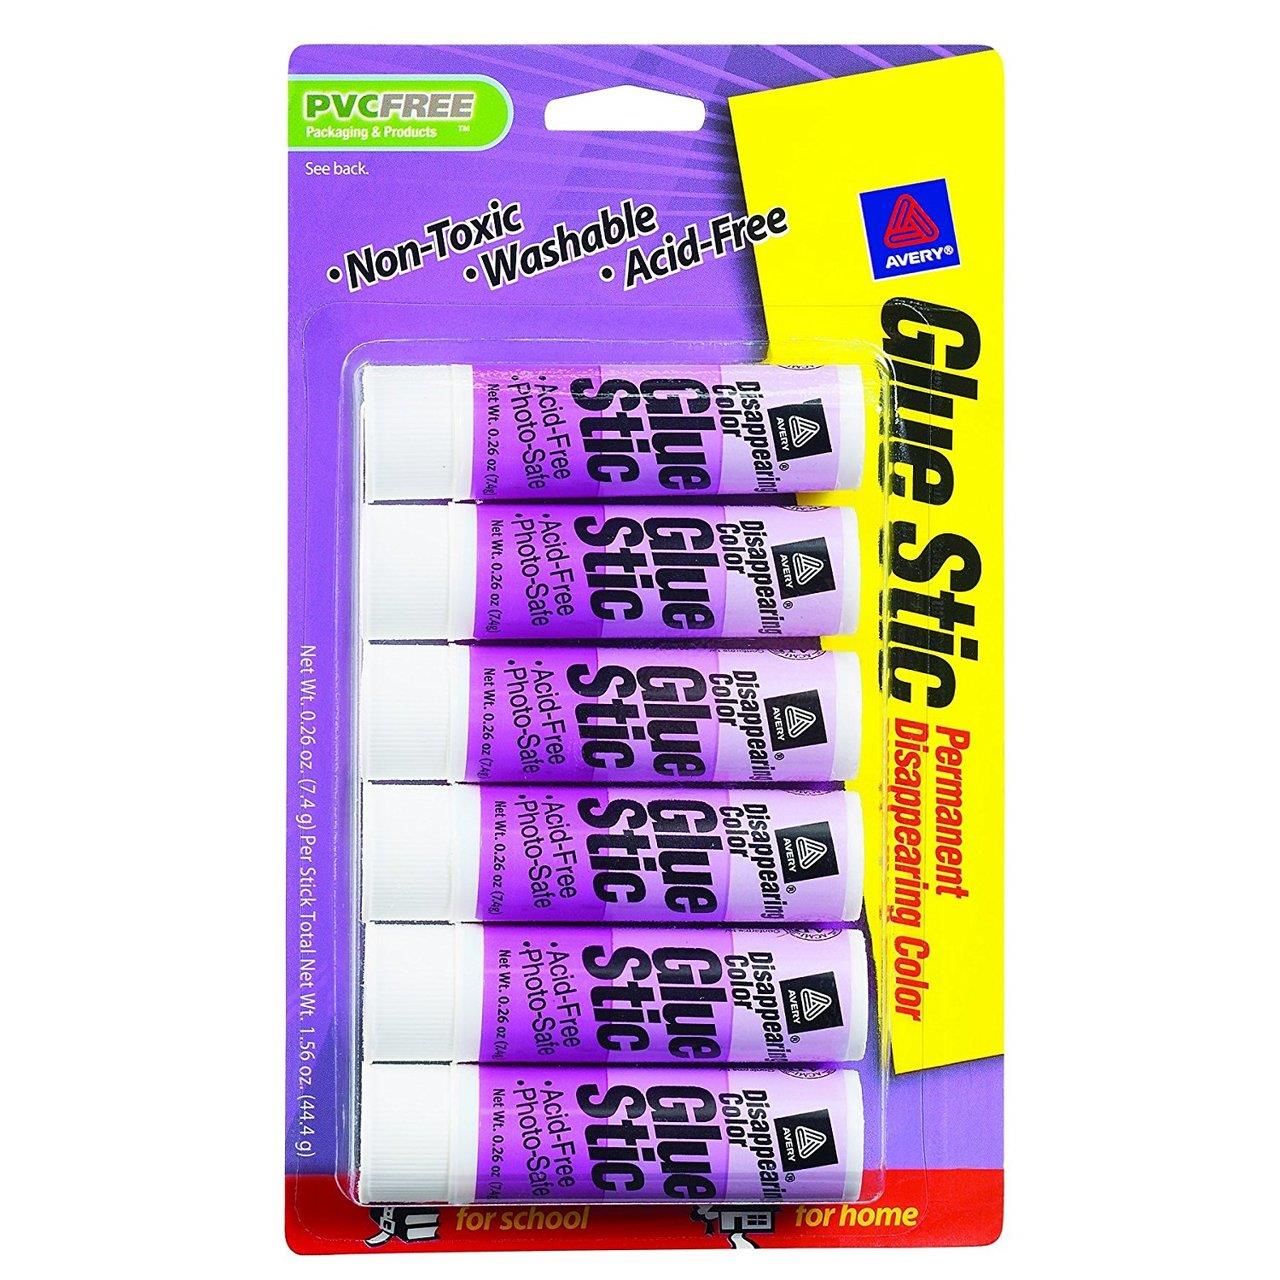 Bulk Permanent Glue Stick, 1.27Oz, White: Avery 00196 (48 Glue Sticks) -  Myriad Greeyn Office Supplies - Disabled Veteran Owned SDVOSB, AbilityOne  Distributor